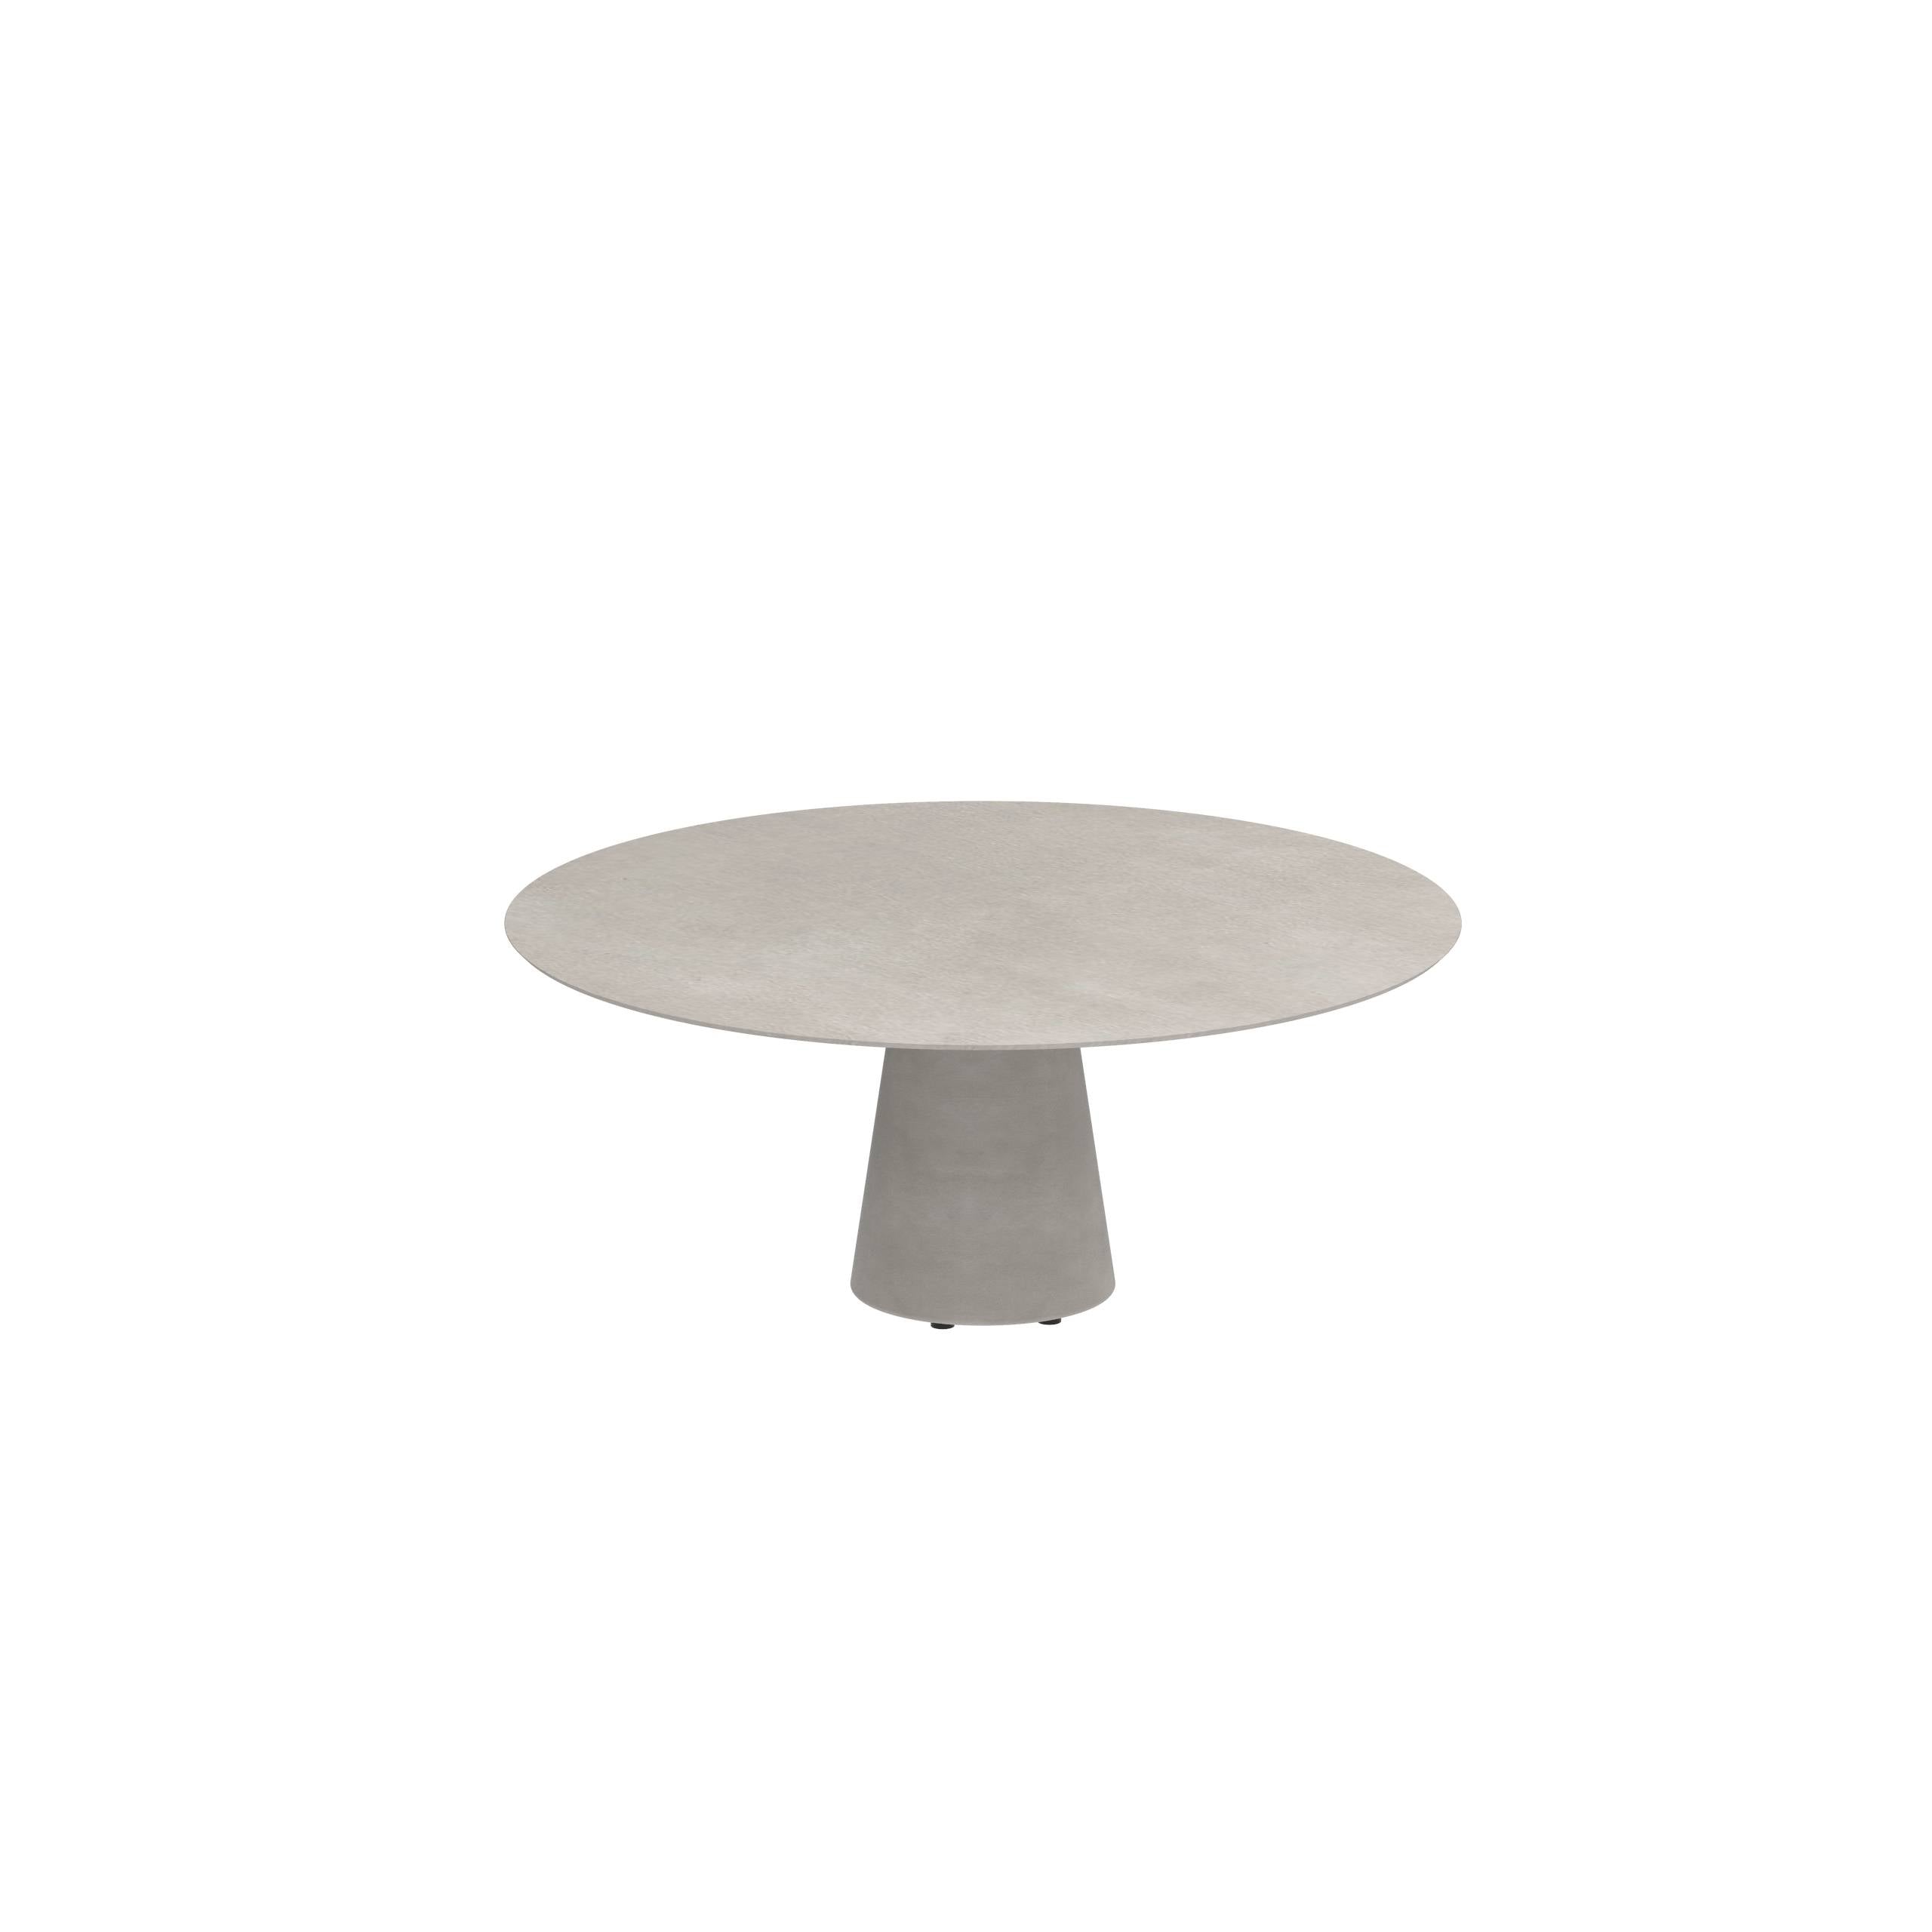 Conix Table Round Ø 160cm Low Dining Leg Concrete Cement Grey - Tabletop Ceramic Cemento Luminoso